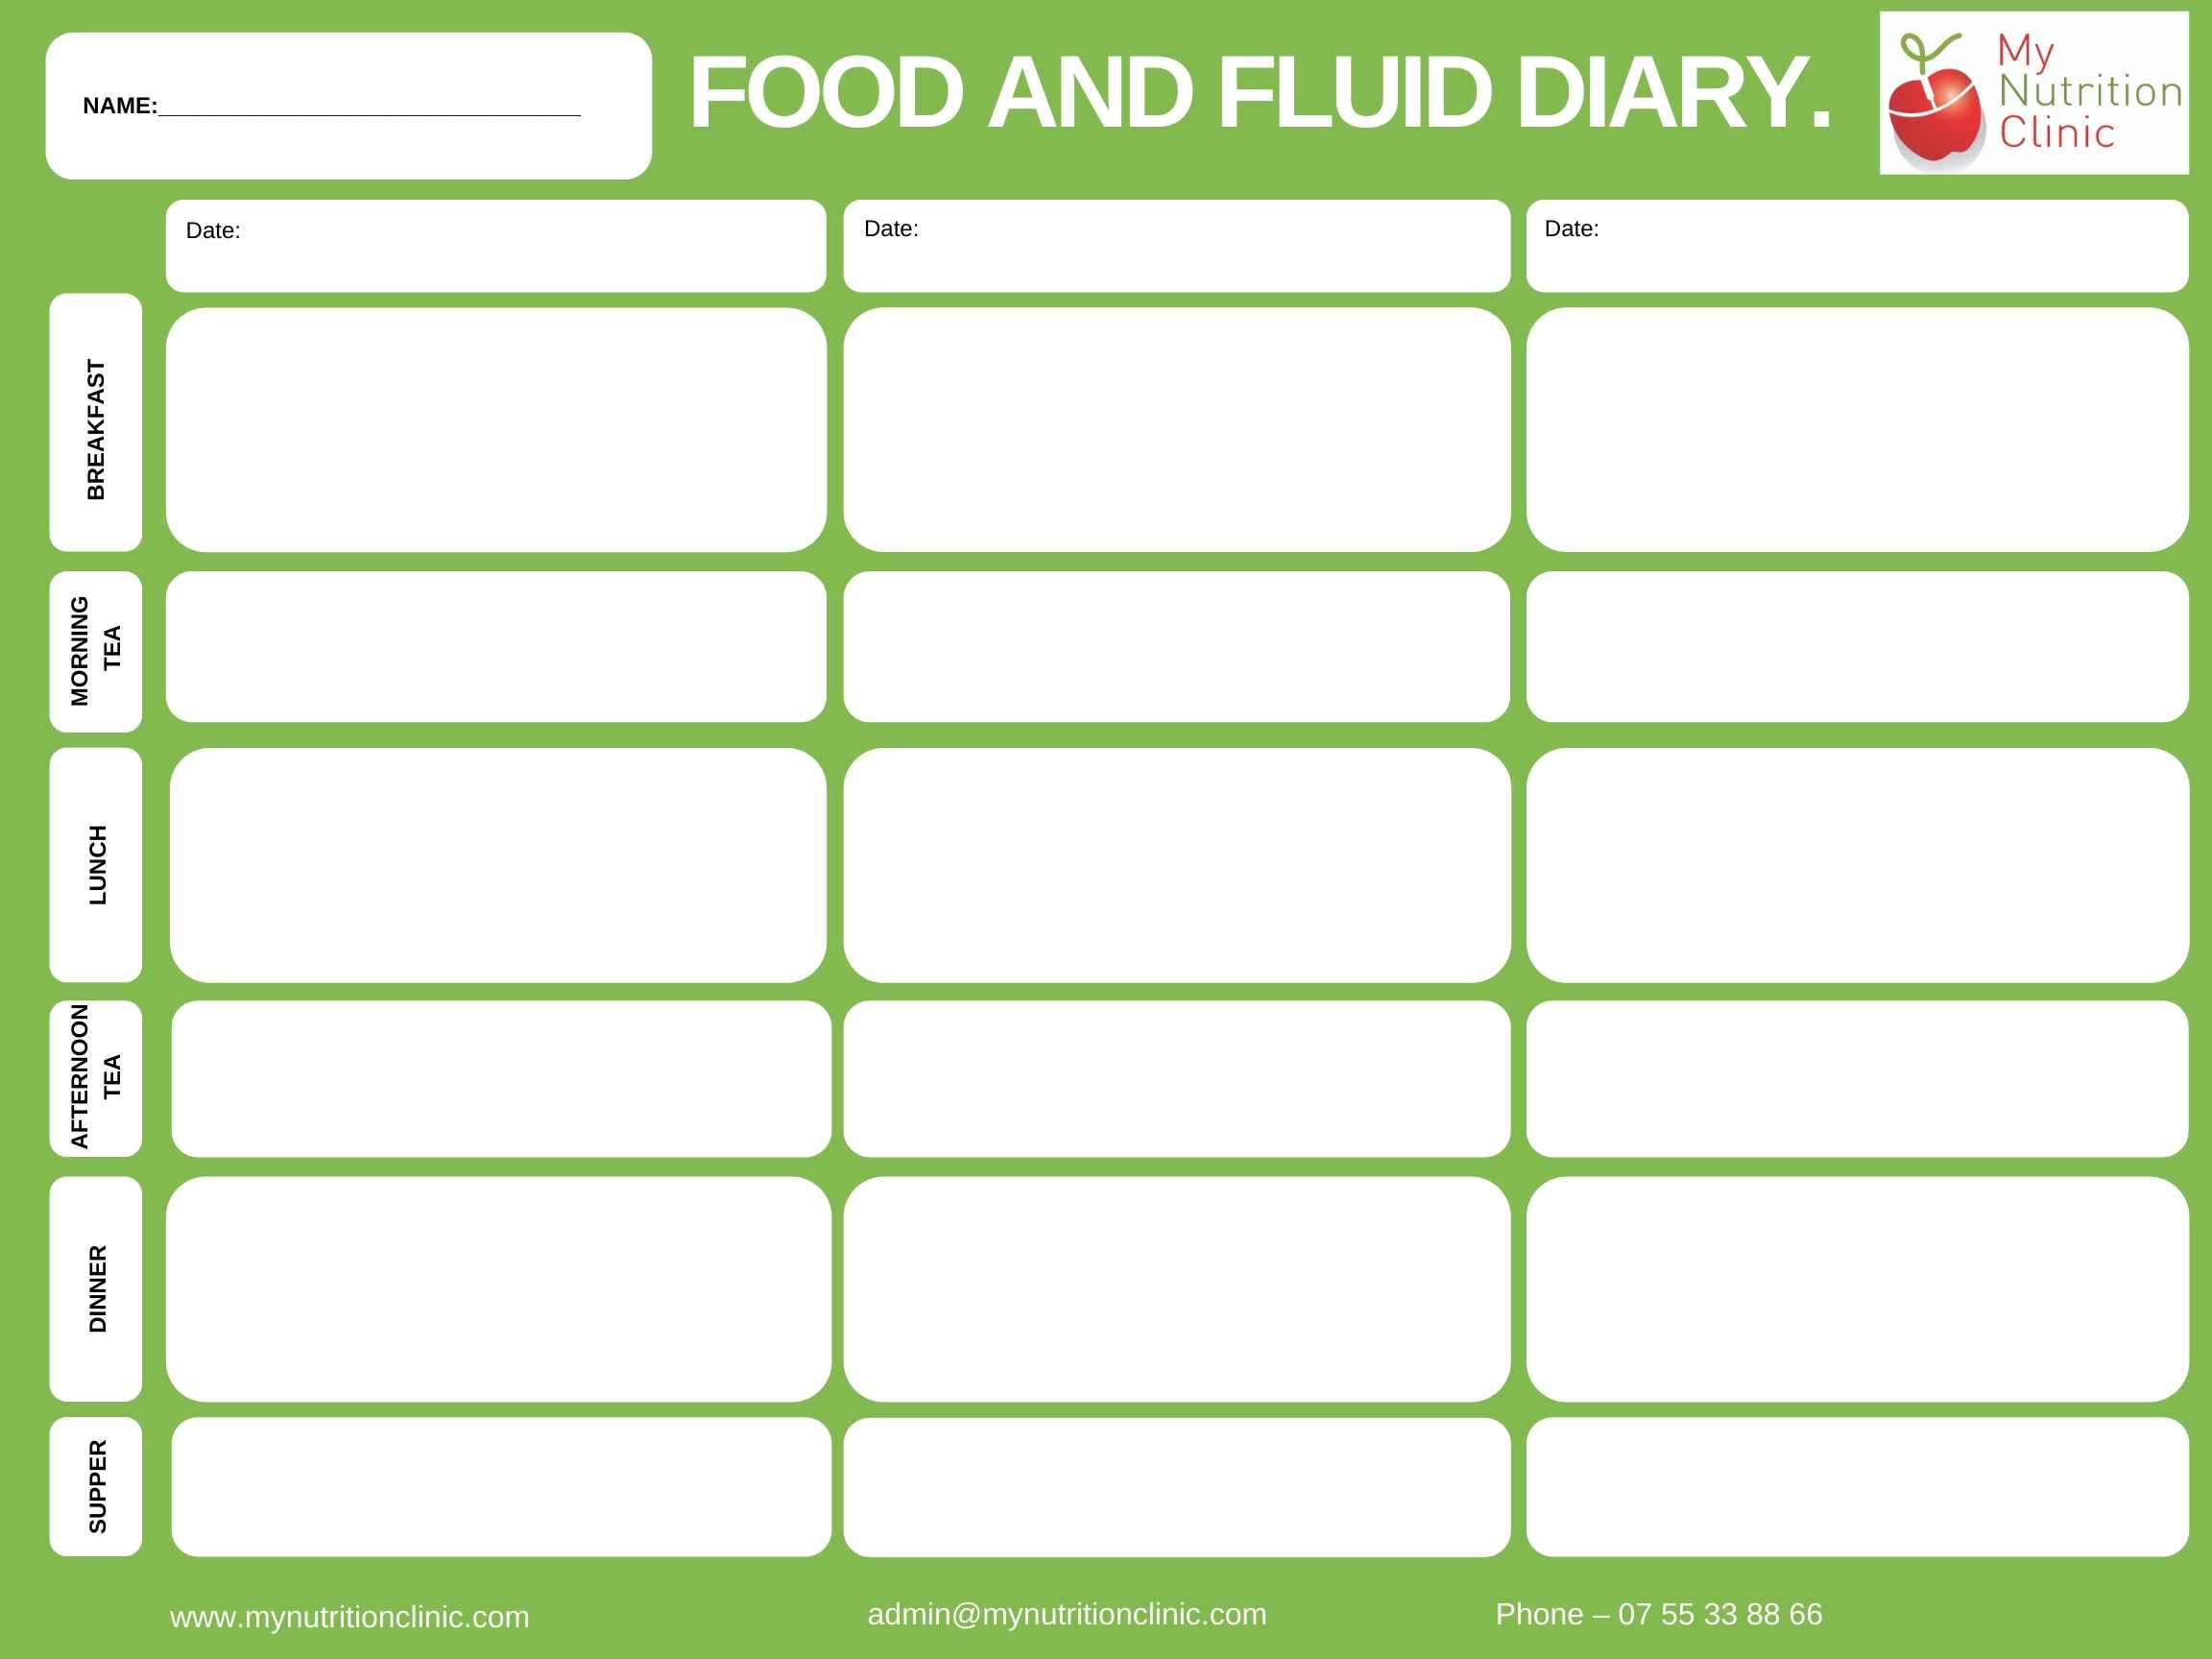 Food and fluid diary